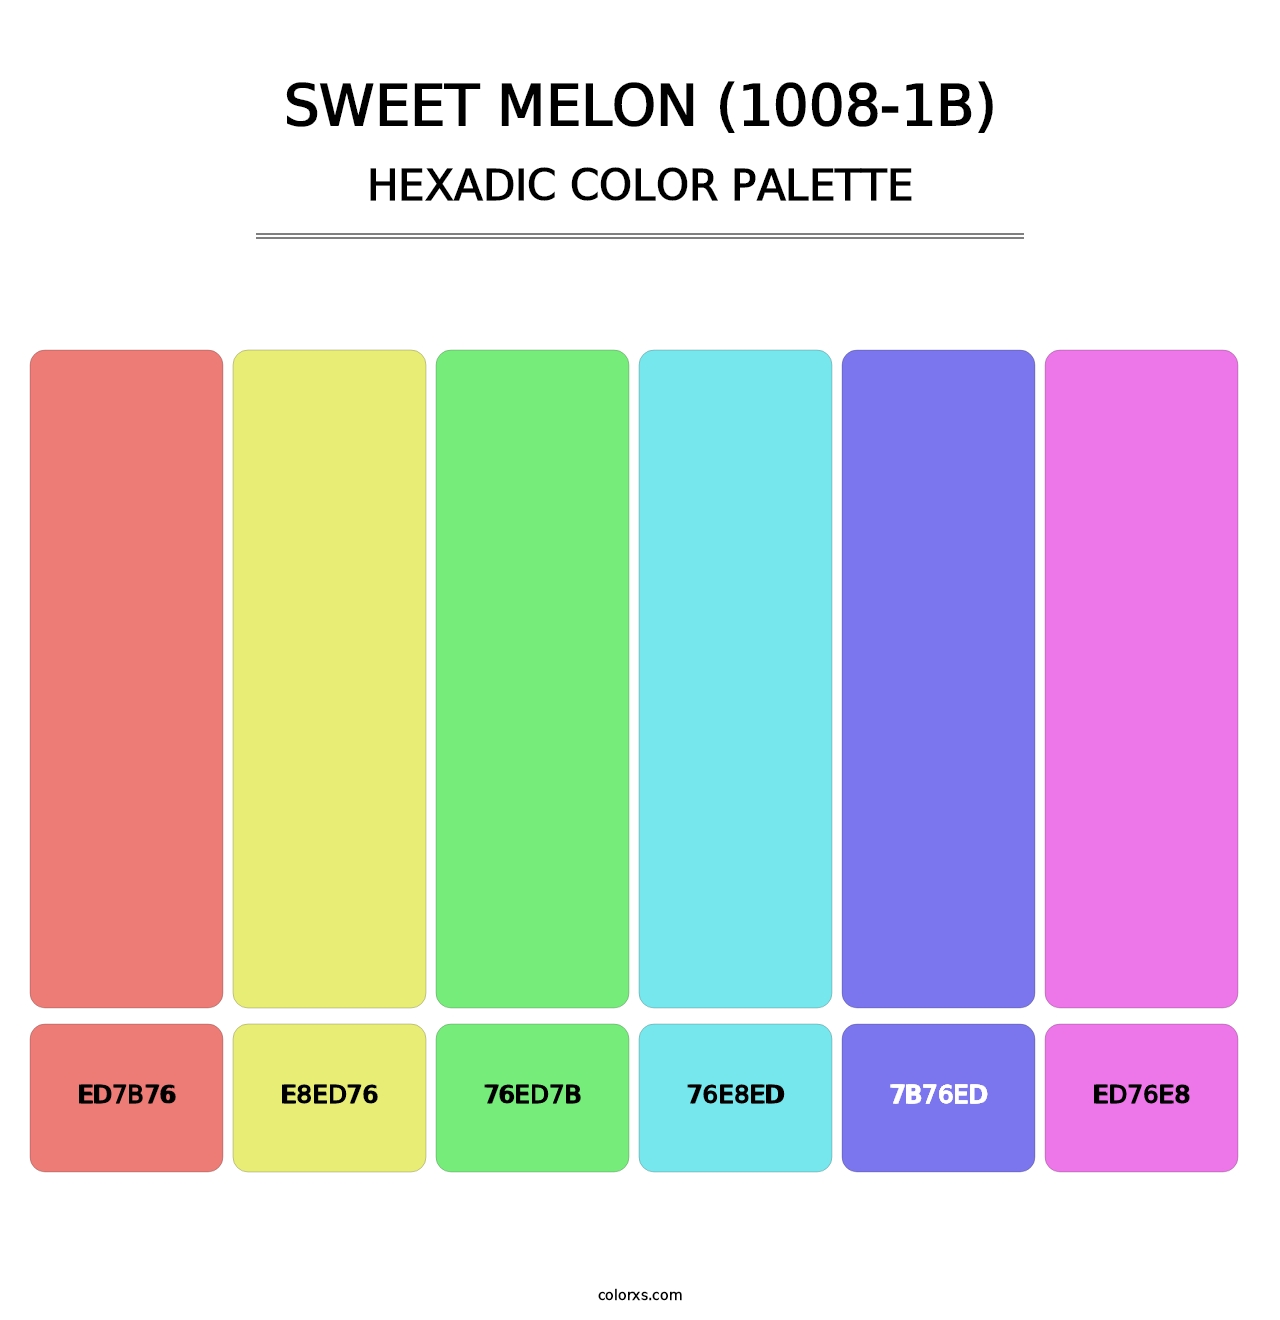 Sweet Melon (1008-1B) - Hexadic Color Palette